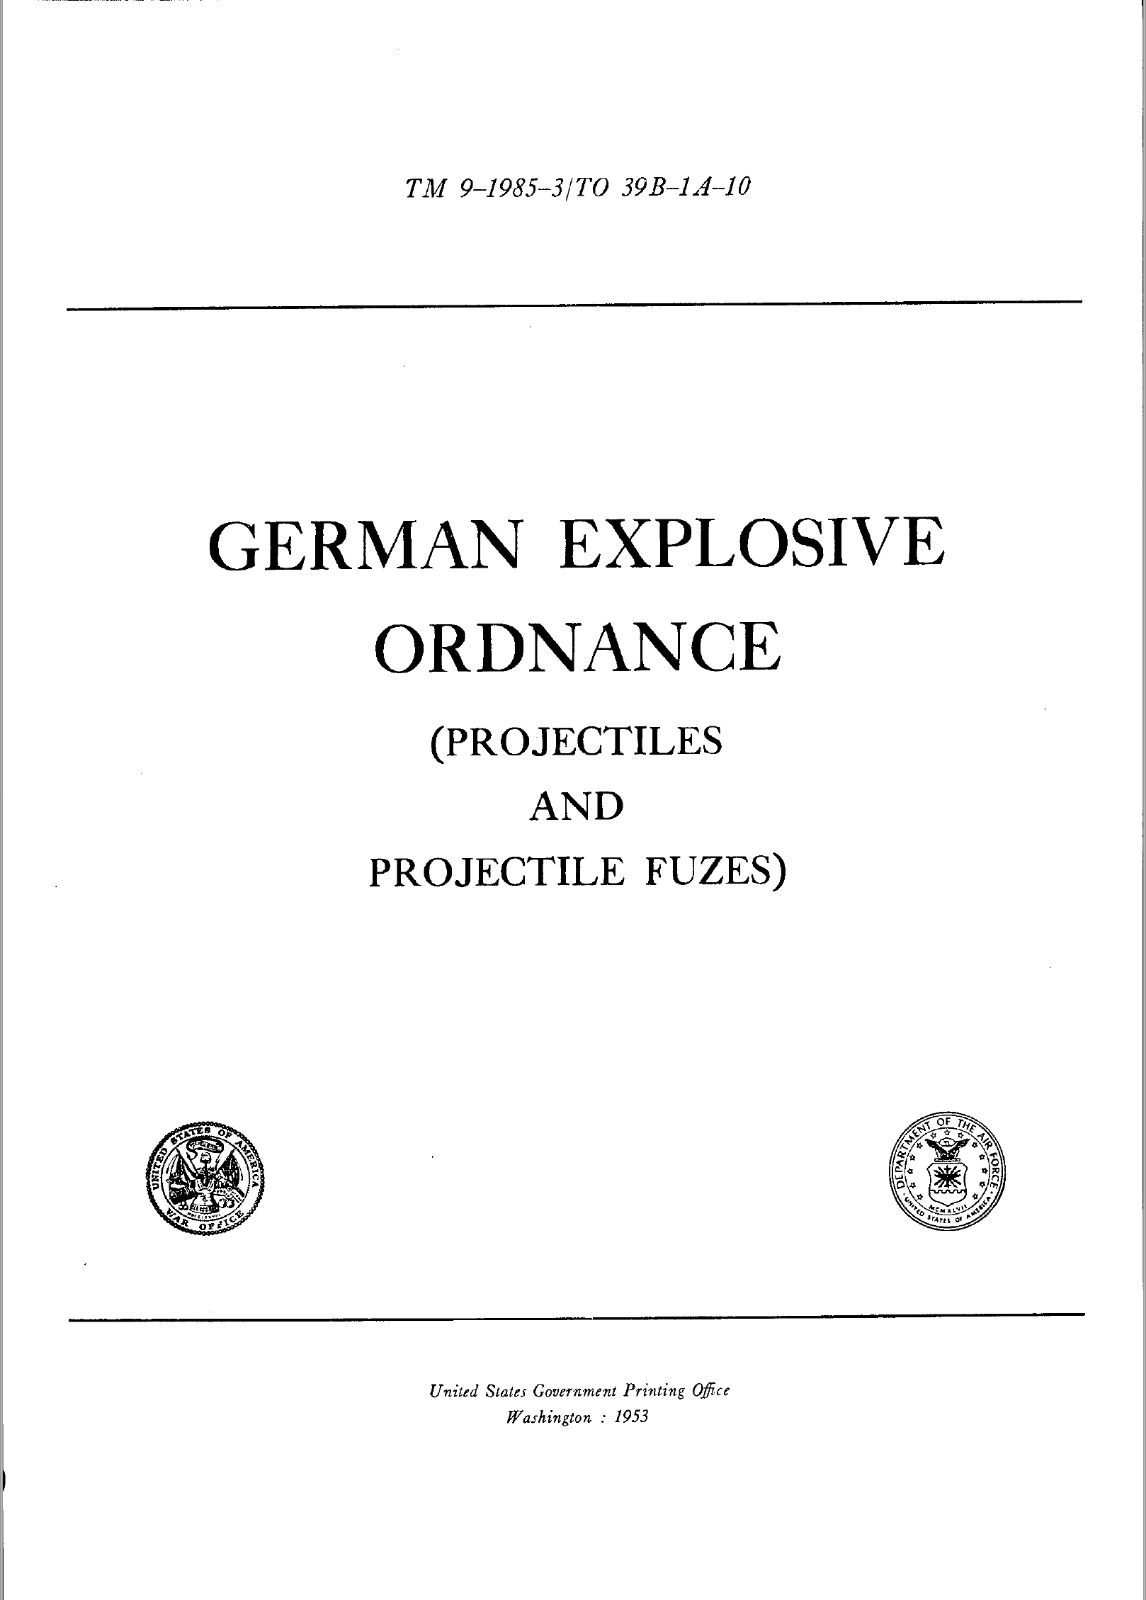 280 Page 1953 TM 9-1985-3 German Explosive Ordnance Technical Manual on CD